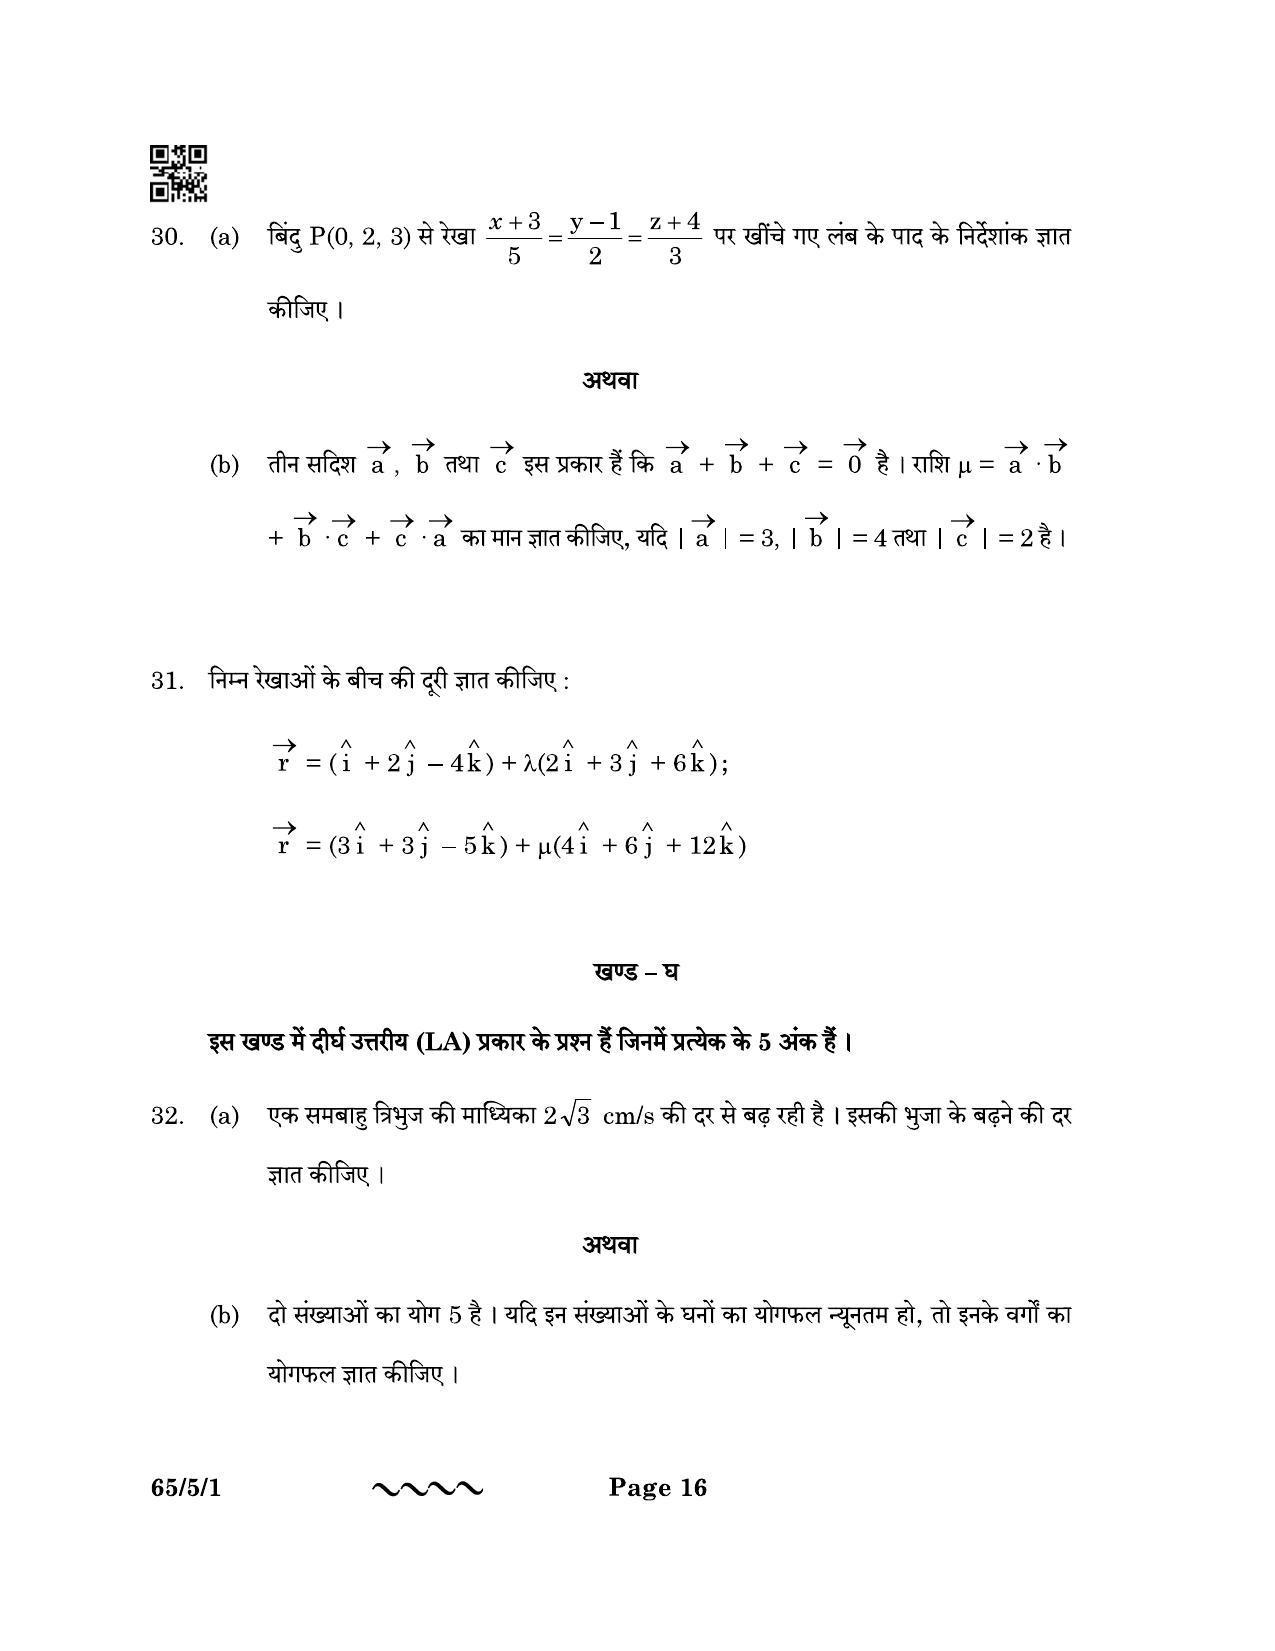 CBSE Class 12 65-5-1 MATHEMATICS 2023 Question Paper - Page 16